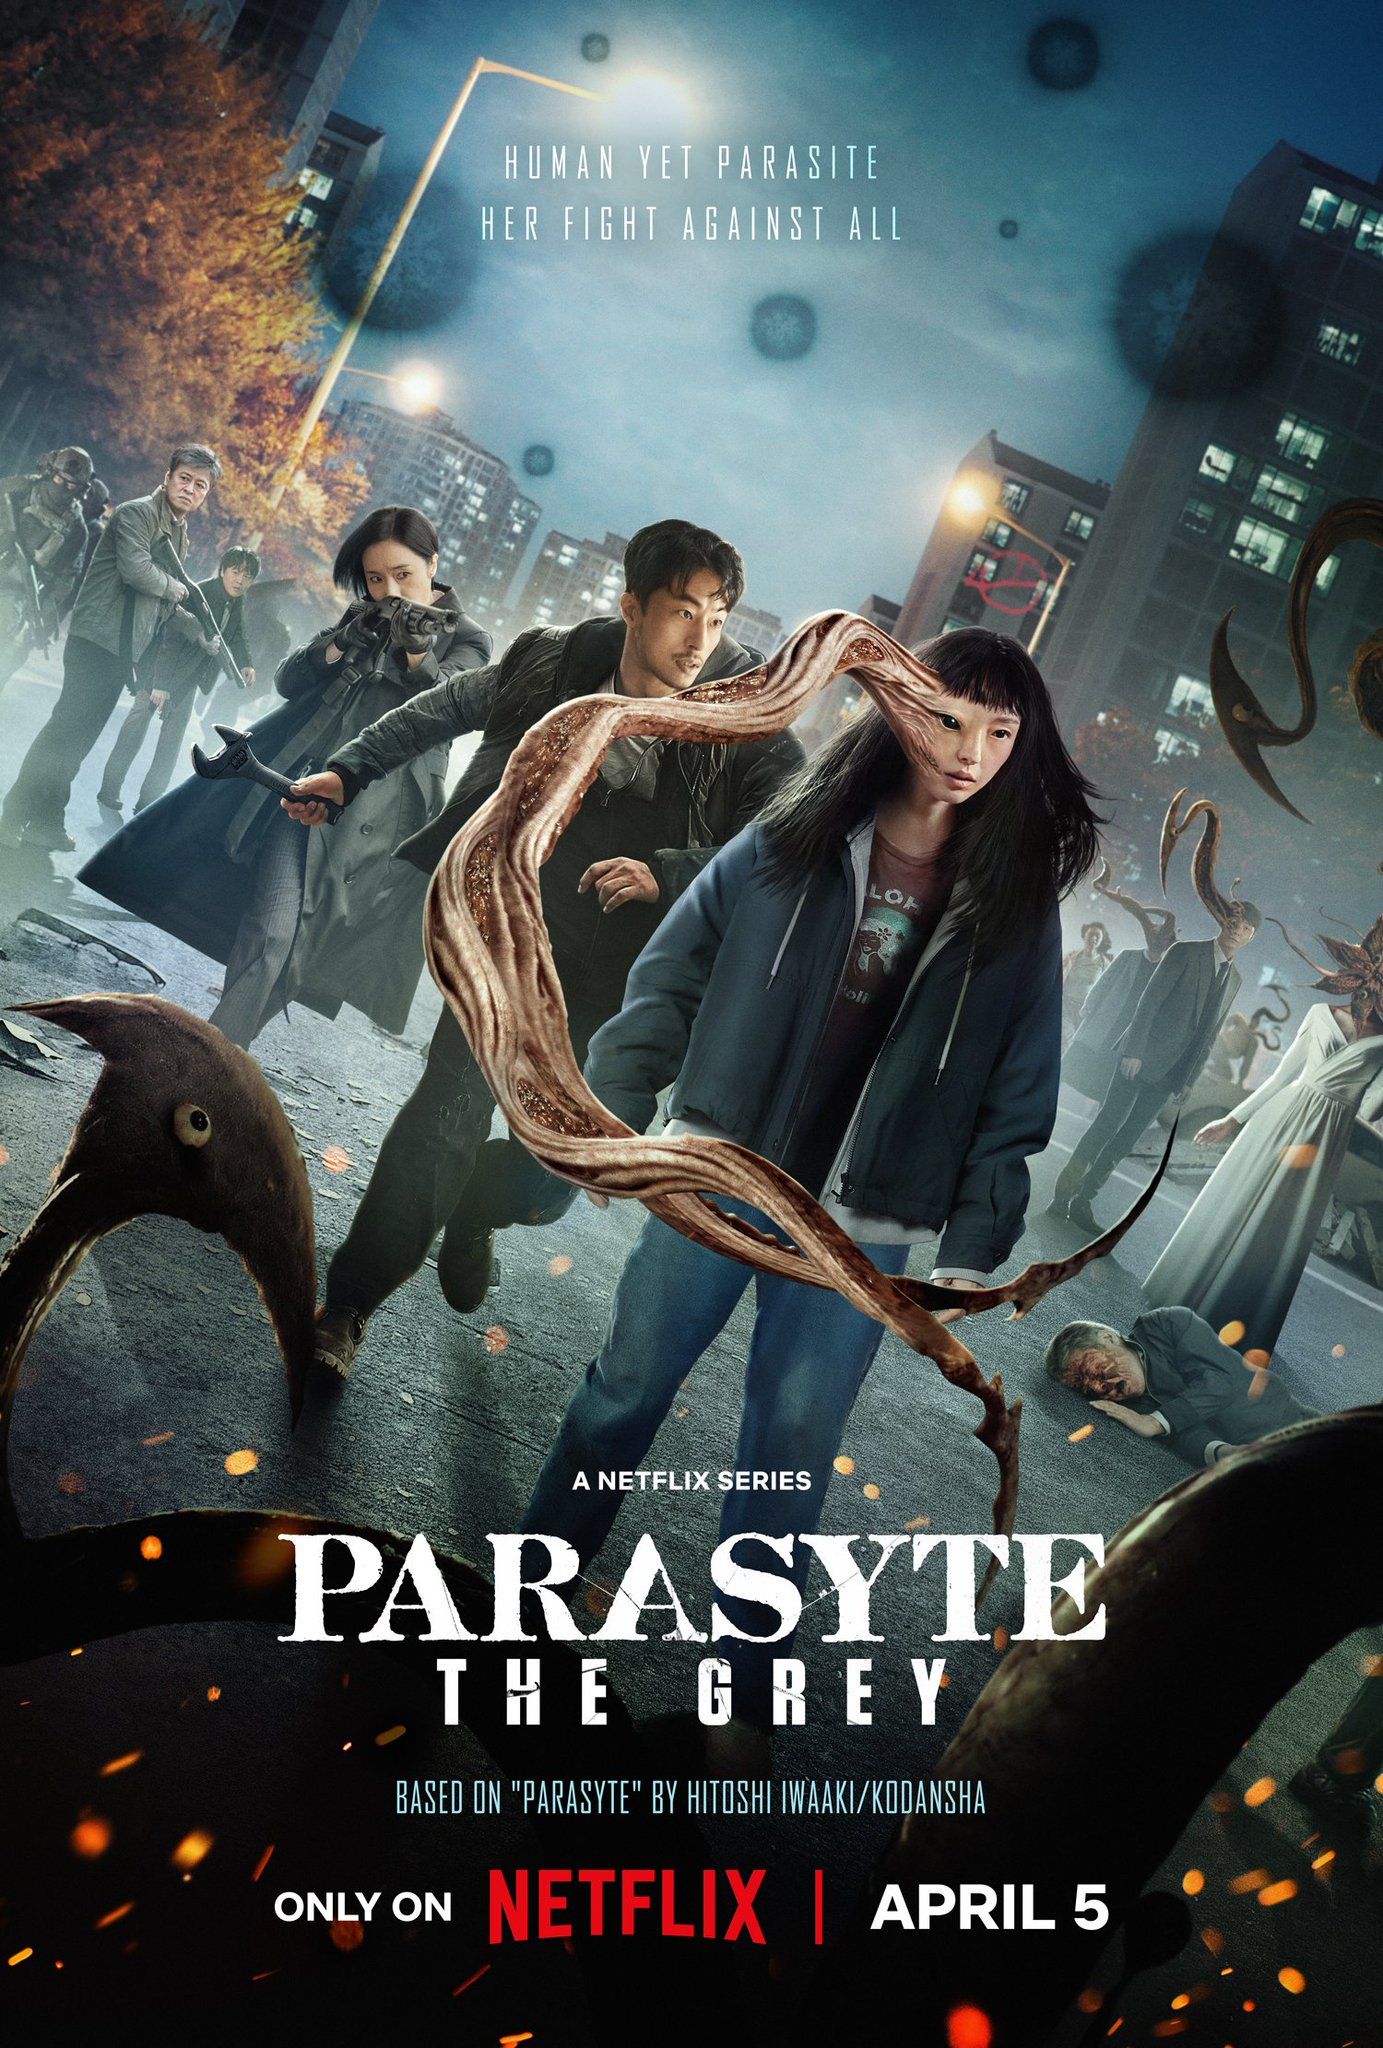 Parasyte the Gray Netflix Poster